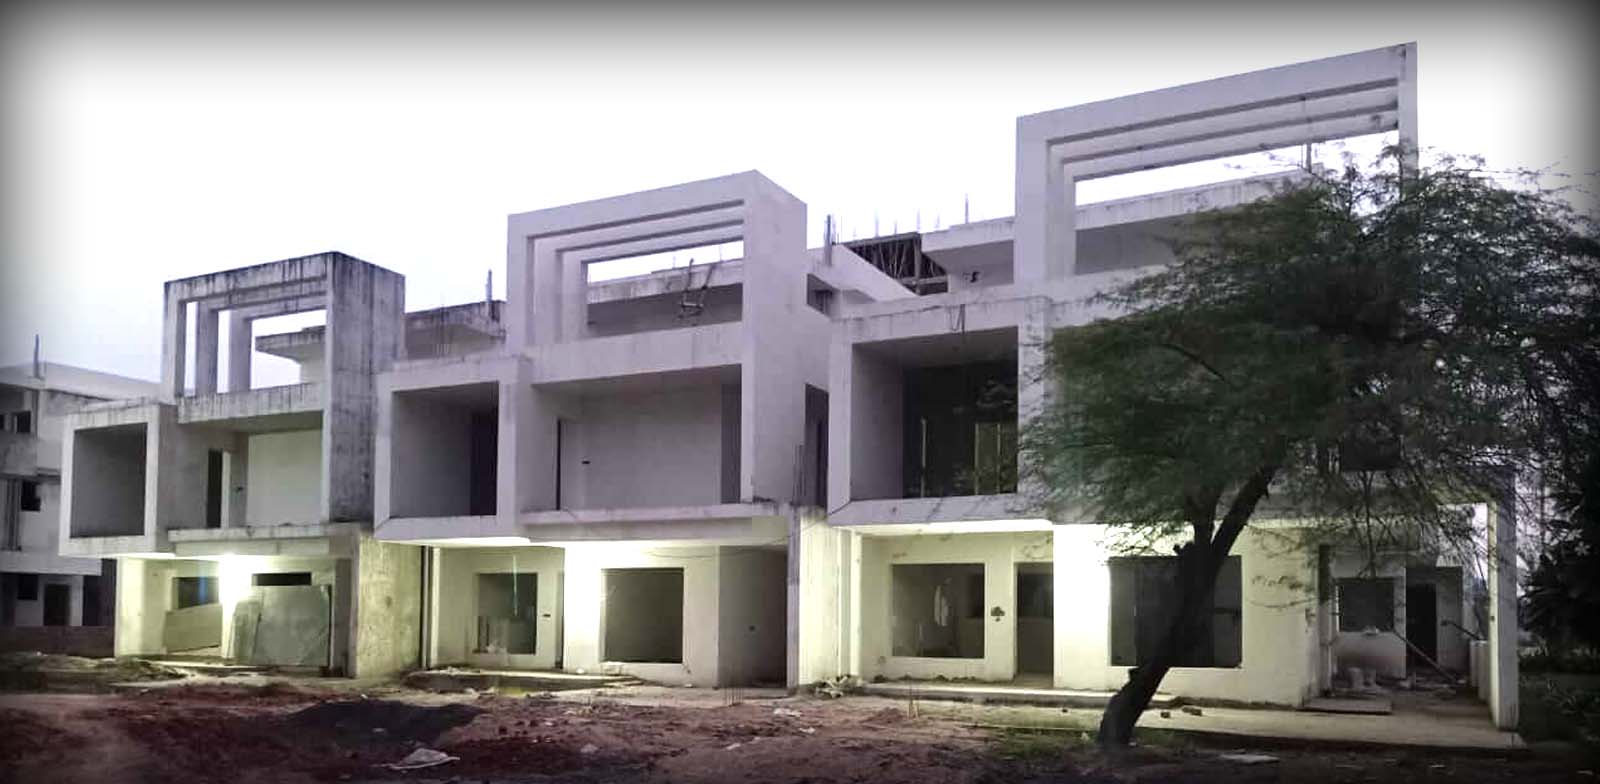 Ulltimate Skyvilla - Ultimate Construction Bhopal